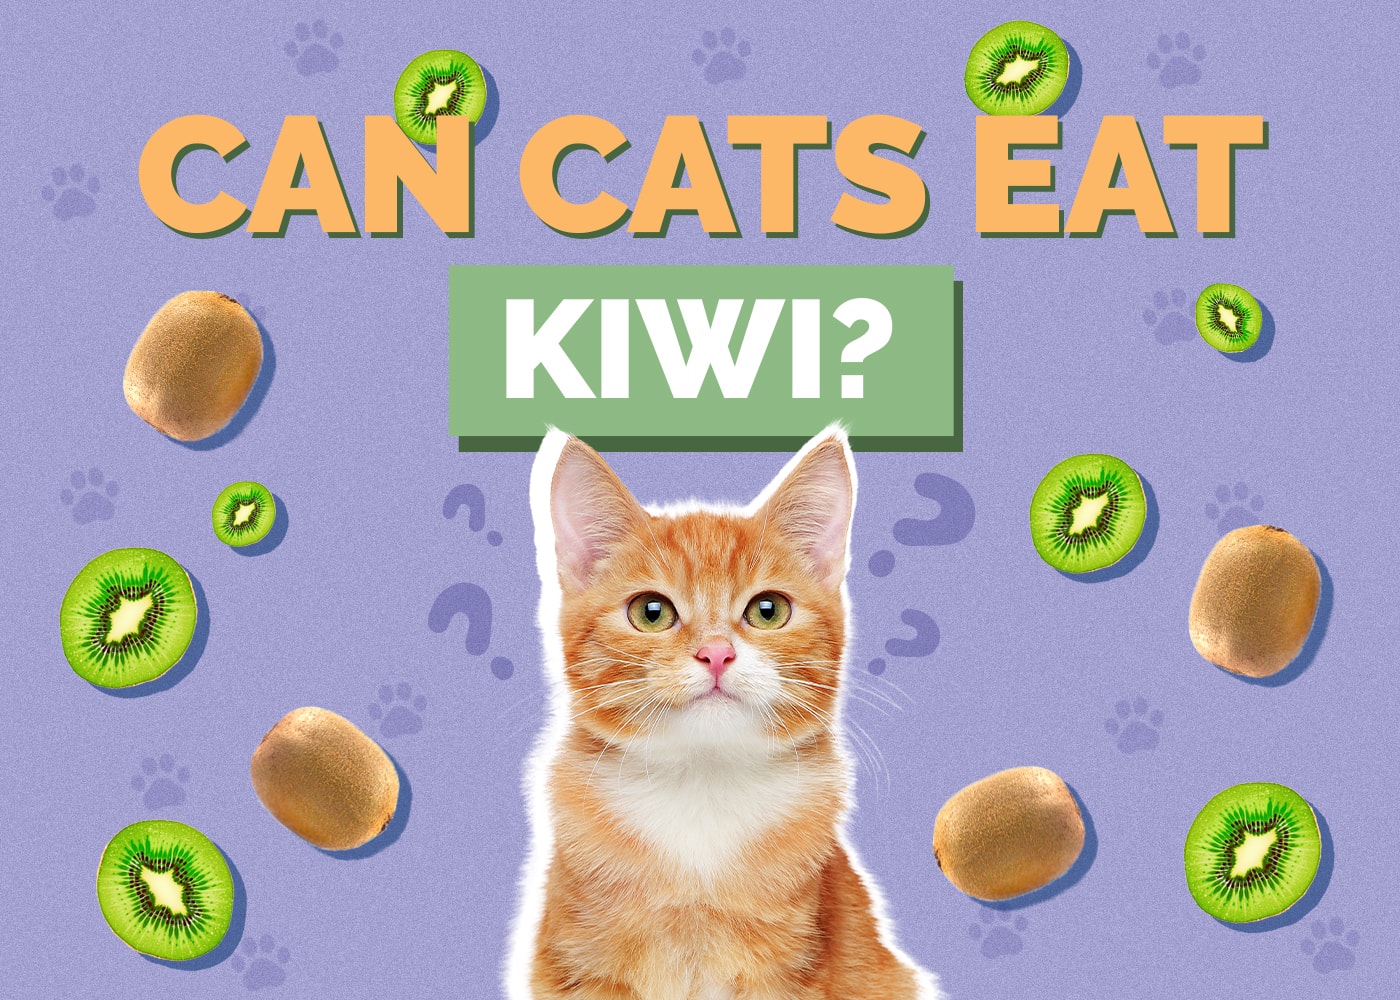 Can Cats Eat kiwi